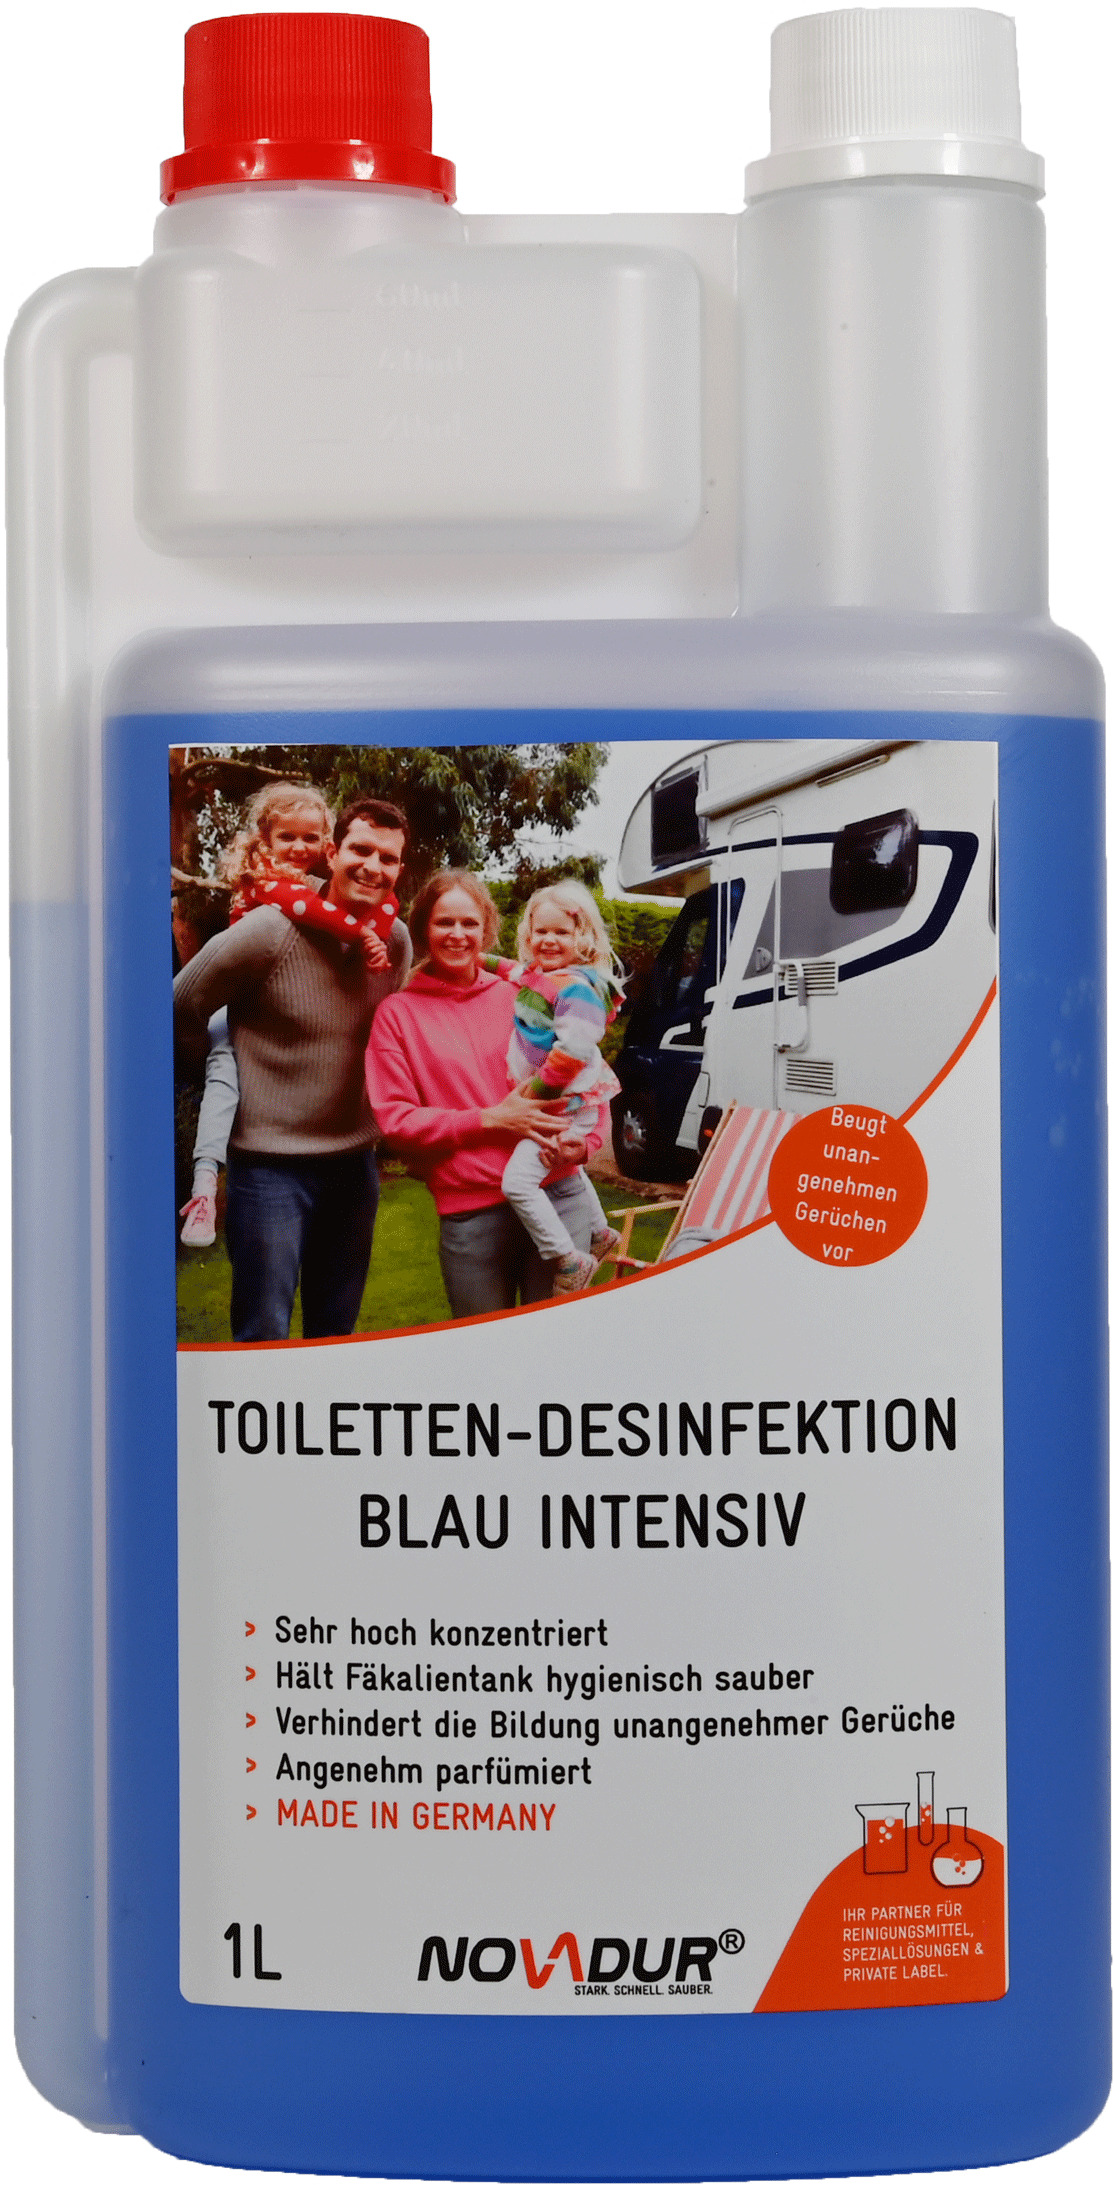 Toiletten-Desinfektion Blau Intensiv